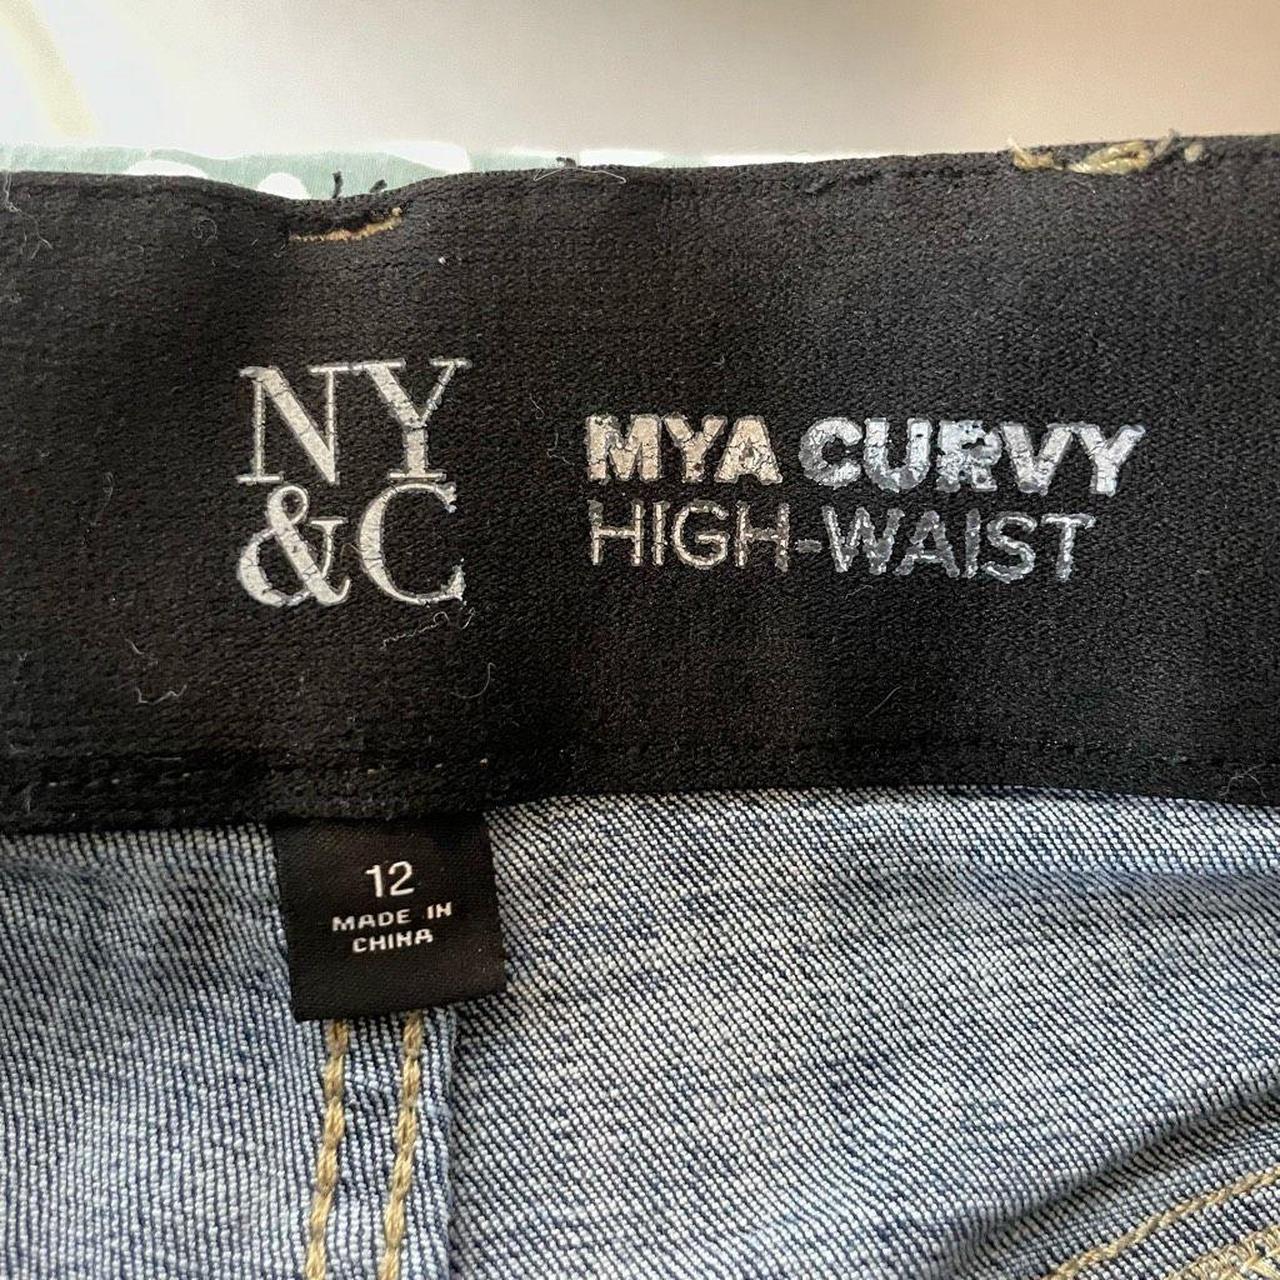 Mya Curvy Collection Women's Clothing